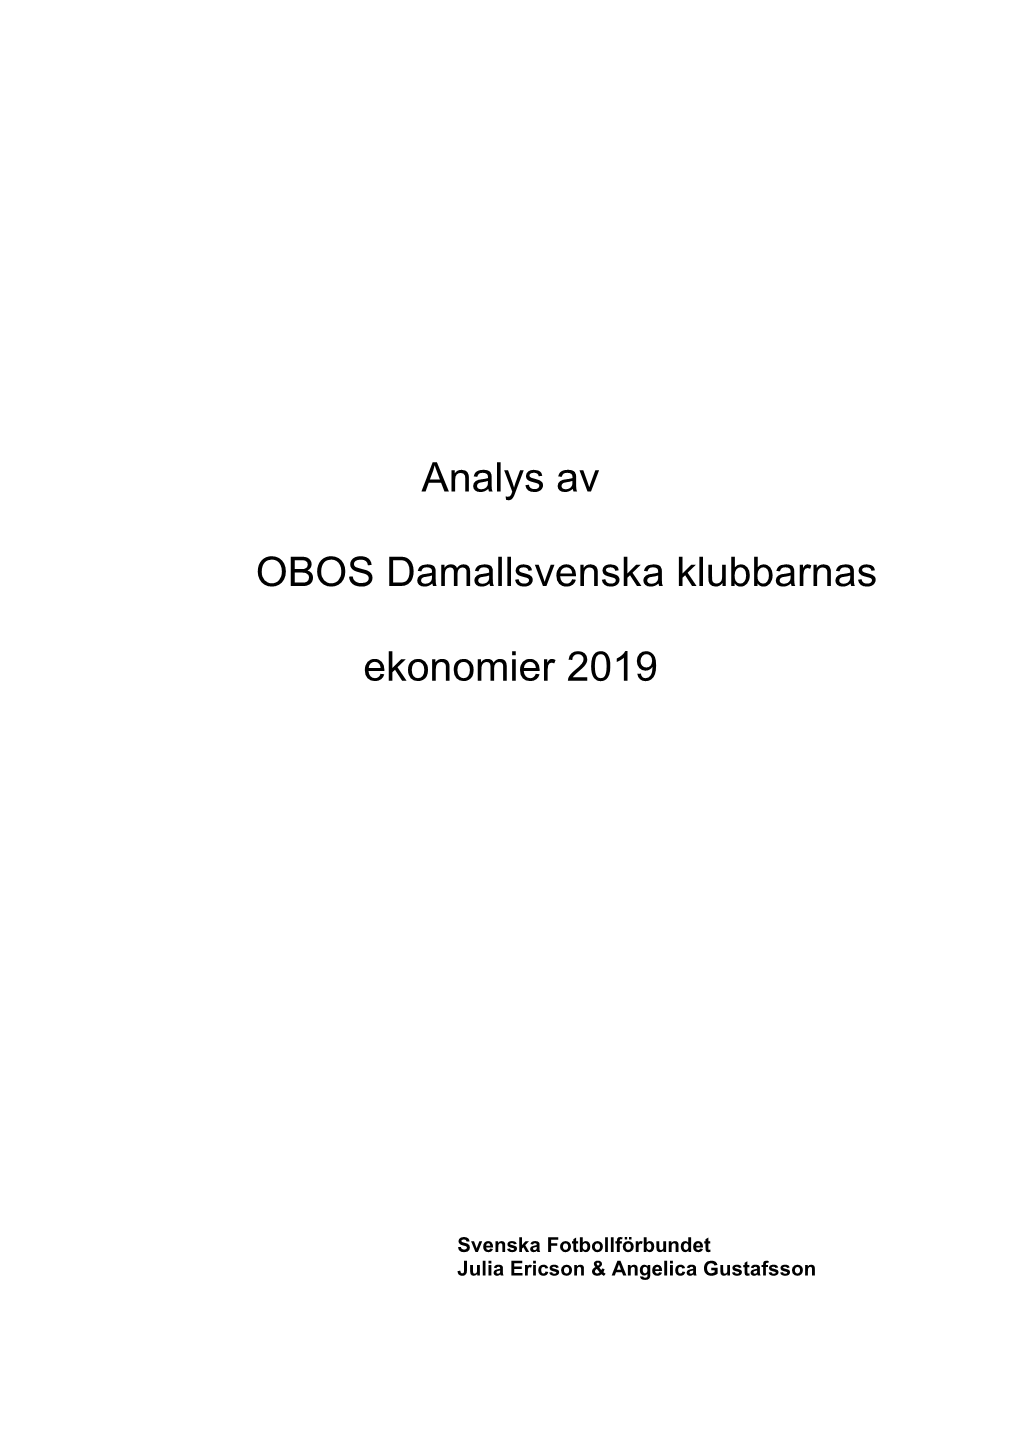 Analys OBOS Damallsvenskan 2019